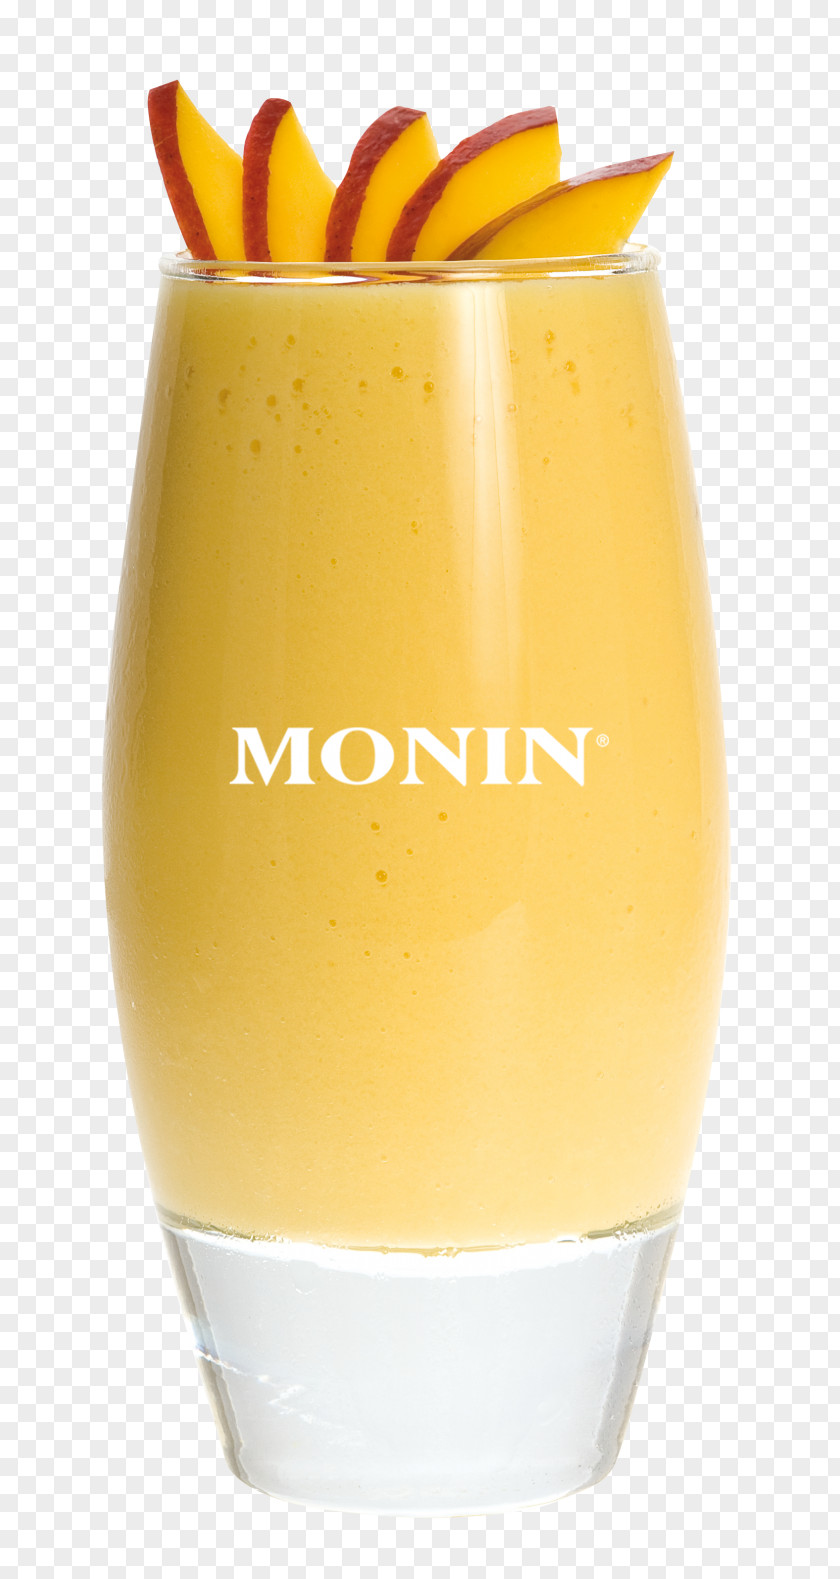 Orange Smoothie Drink Monin, Inc. Juice Milkshake Cocktail PNG